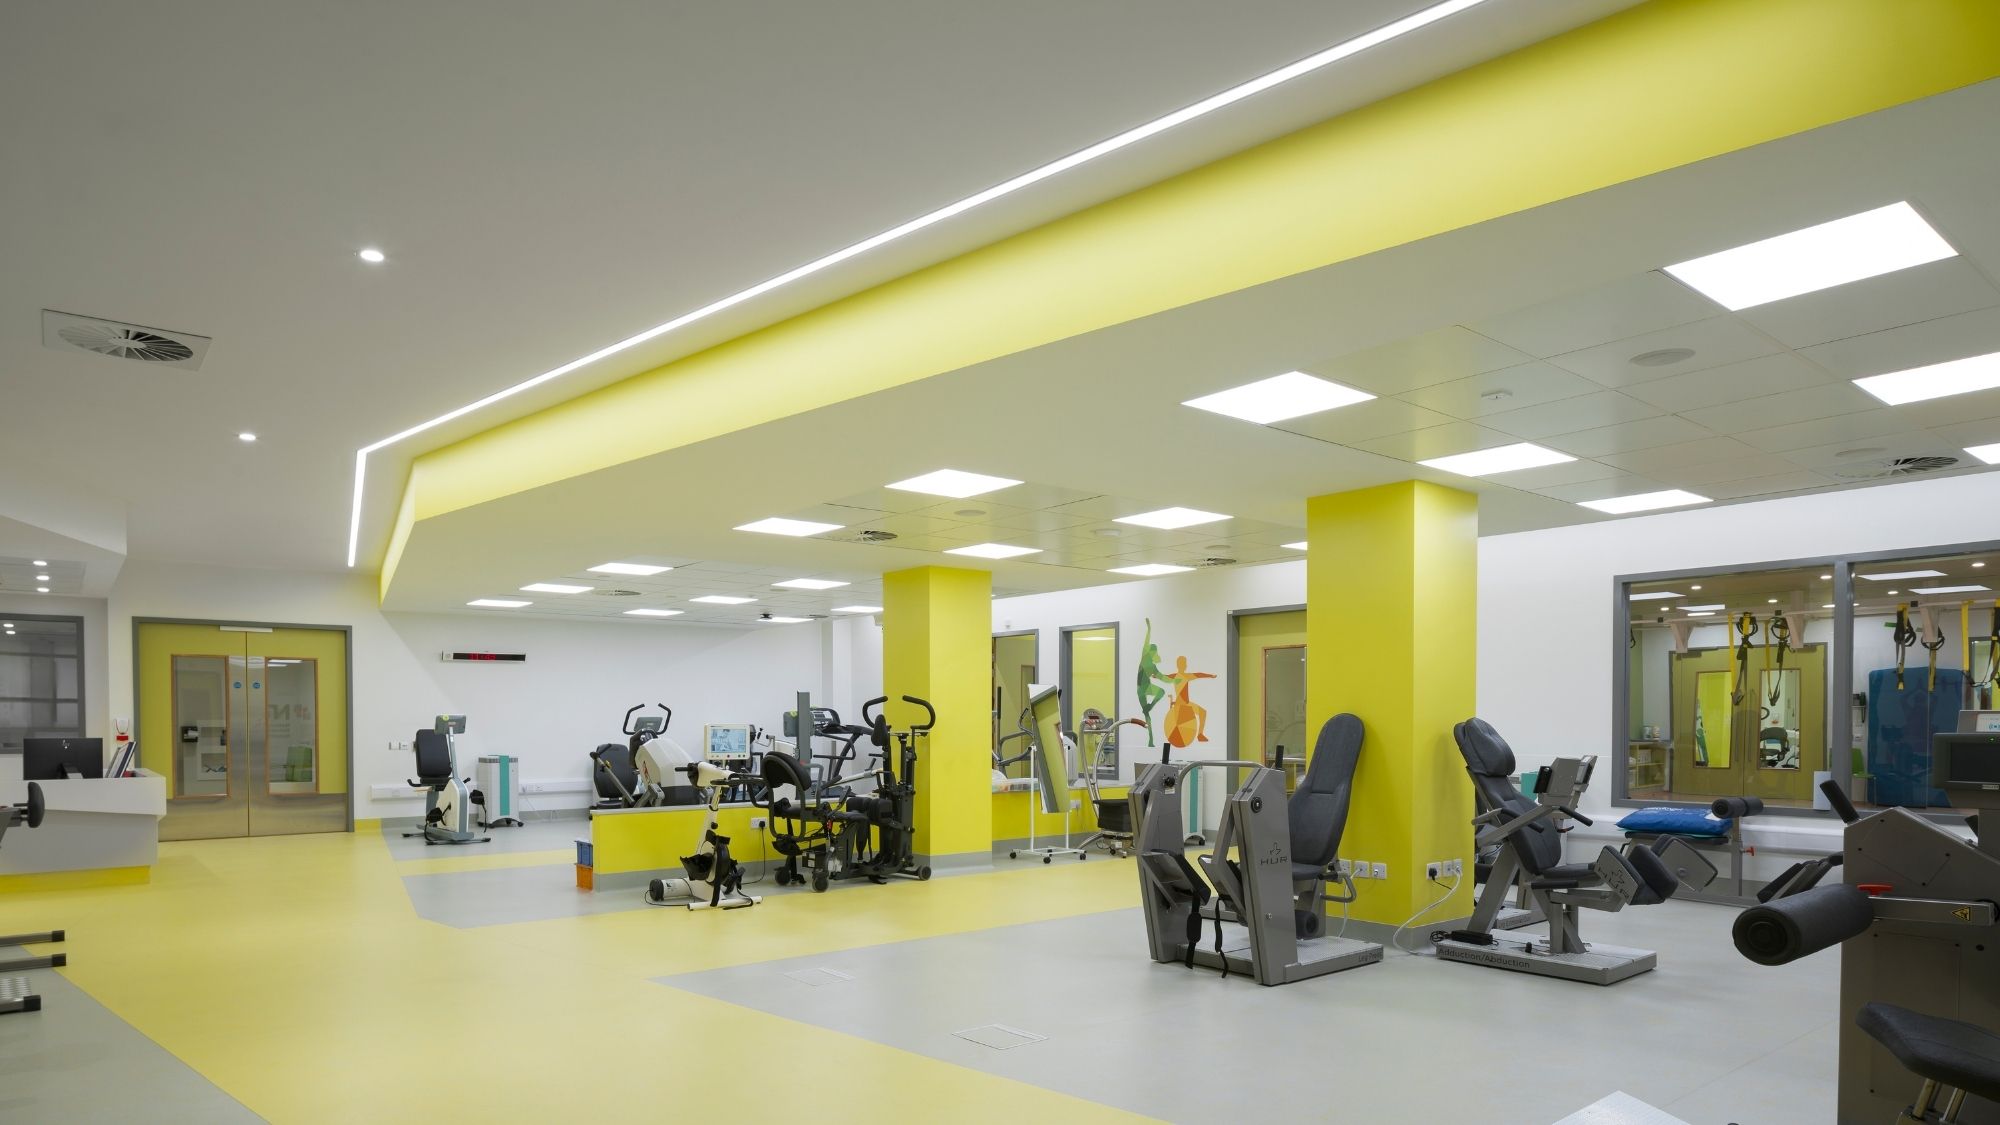 Gym in National Rehabilitation Hospital in Ireland.